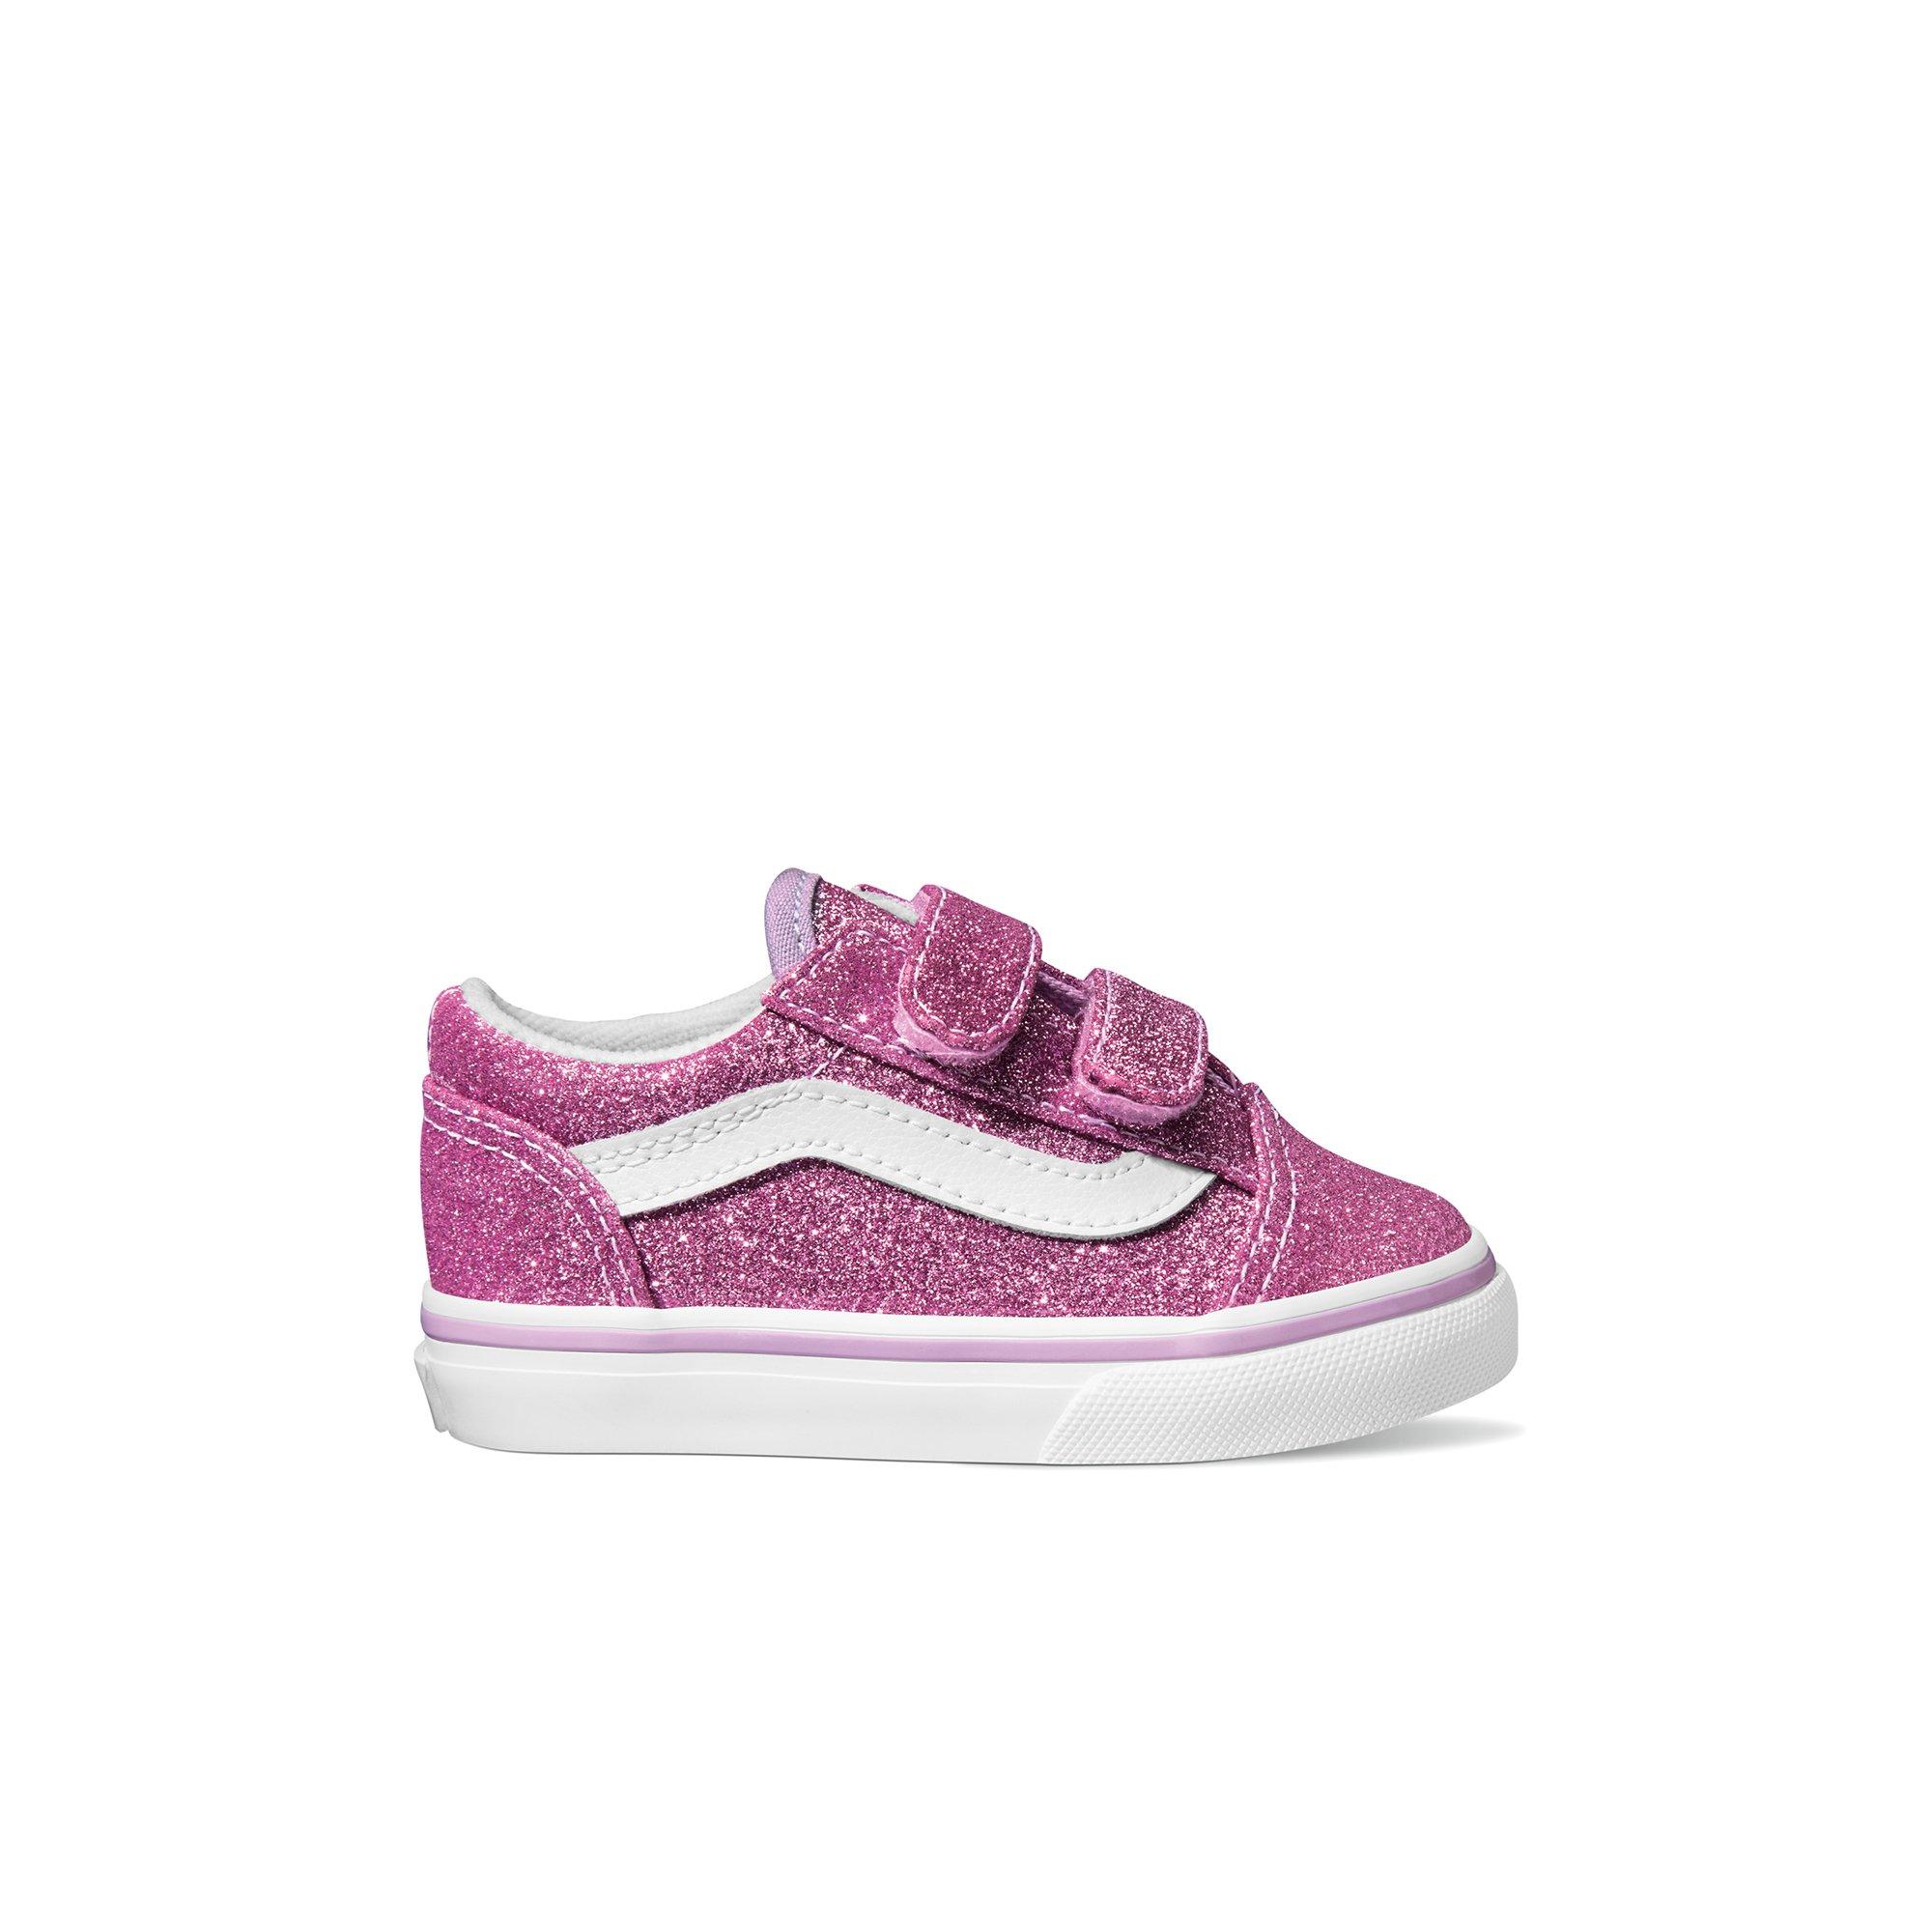 Vans Old Skool V Glitter Skate Shoe - Baby / Toddler - Lilac